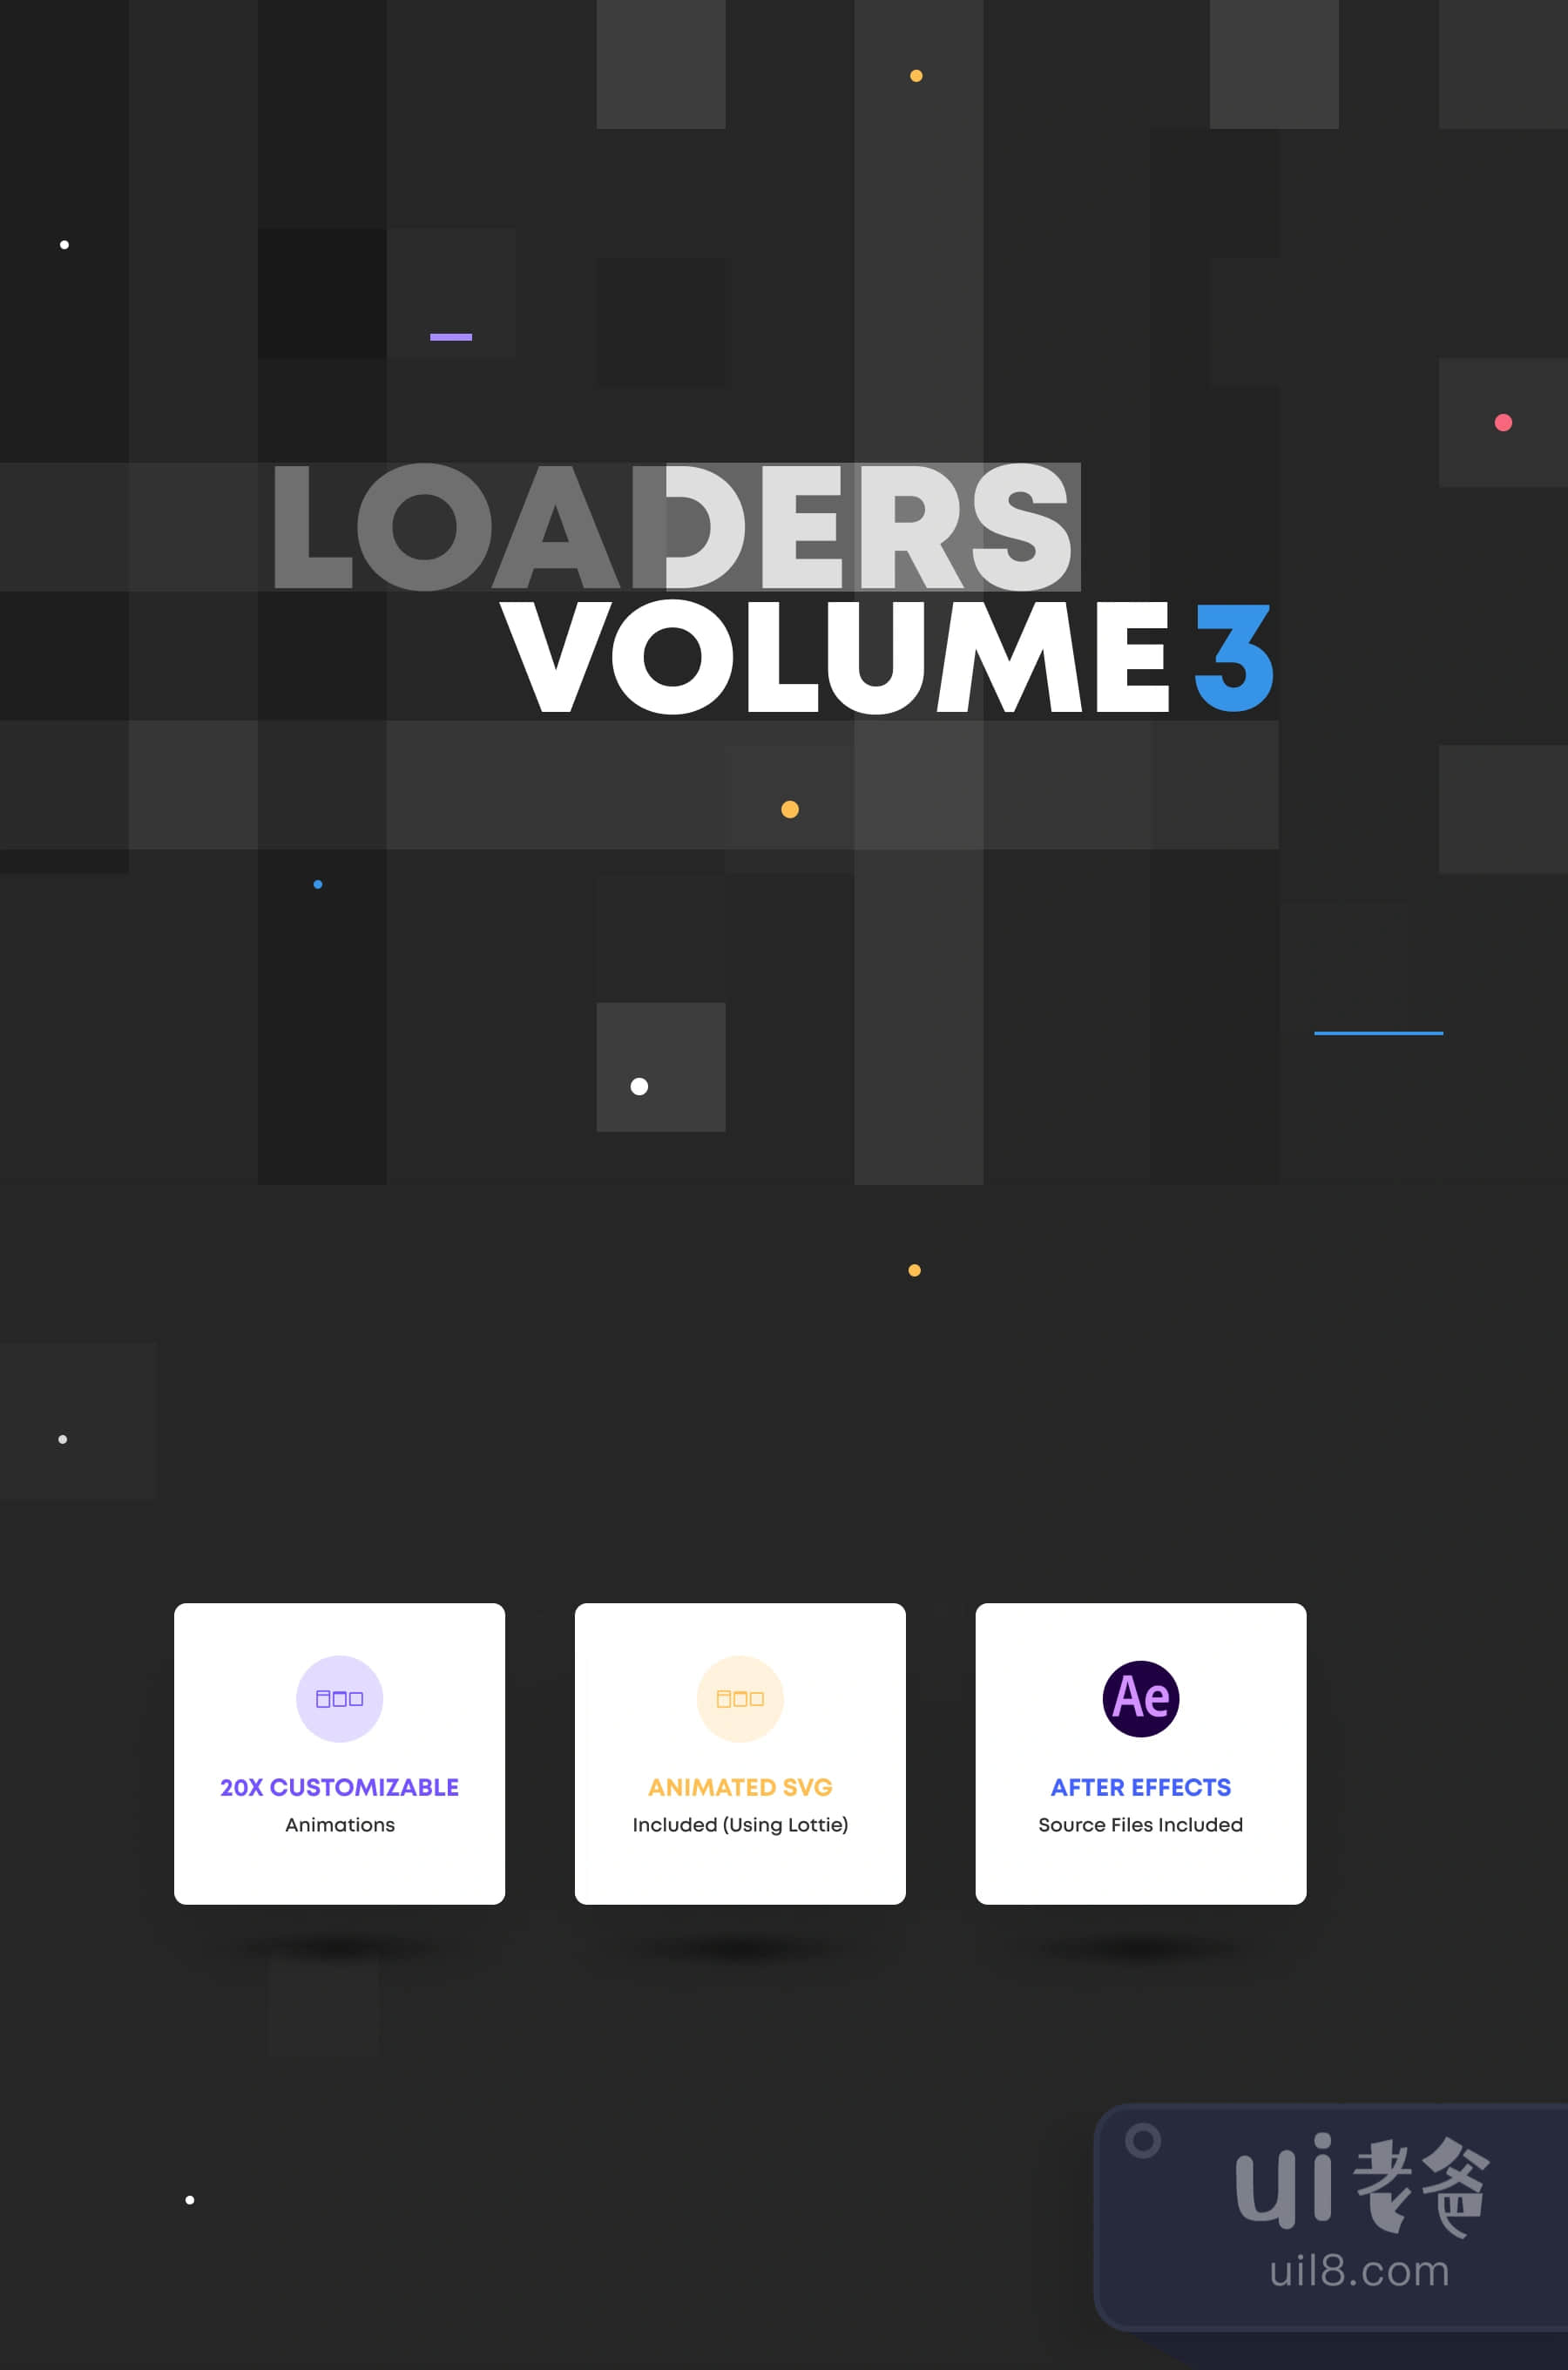 装载器第三卷 (Loaders Volume 3)插图